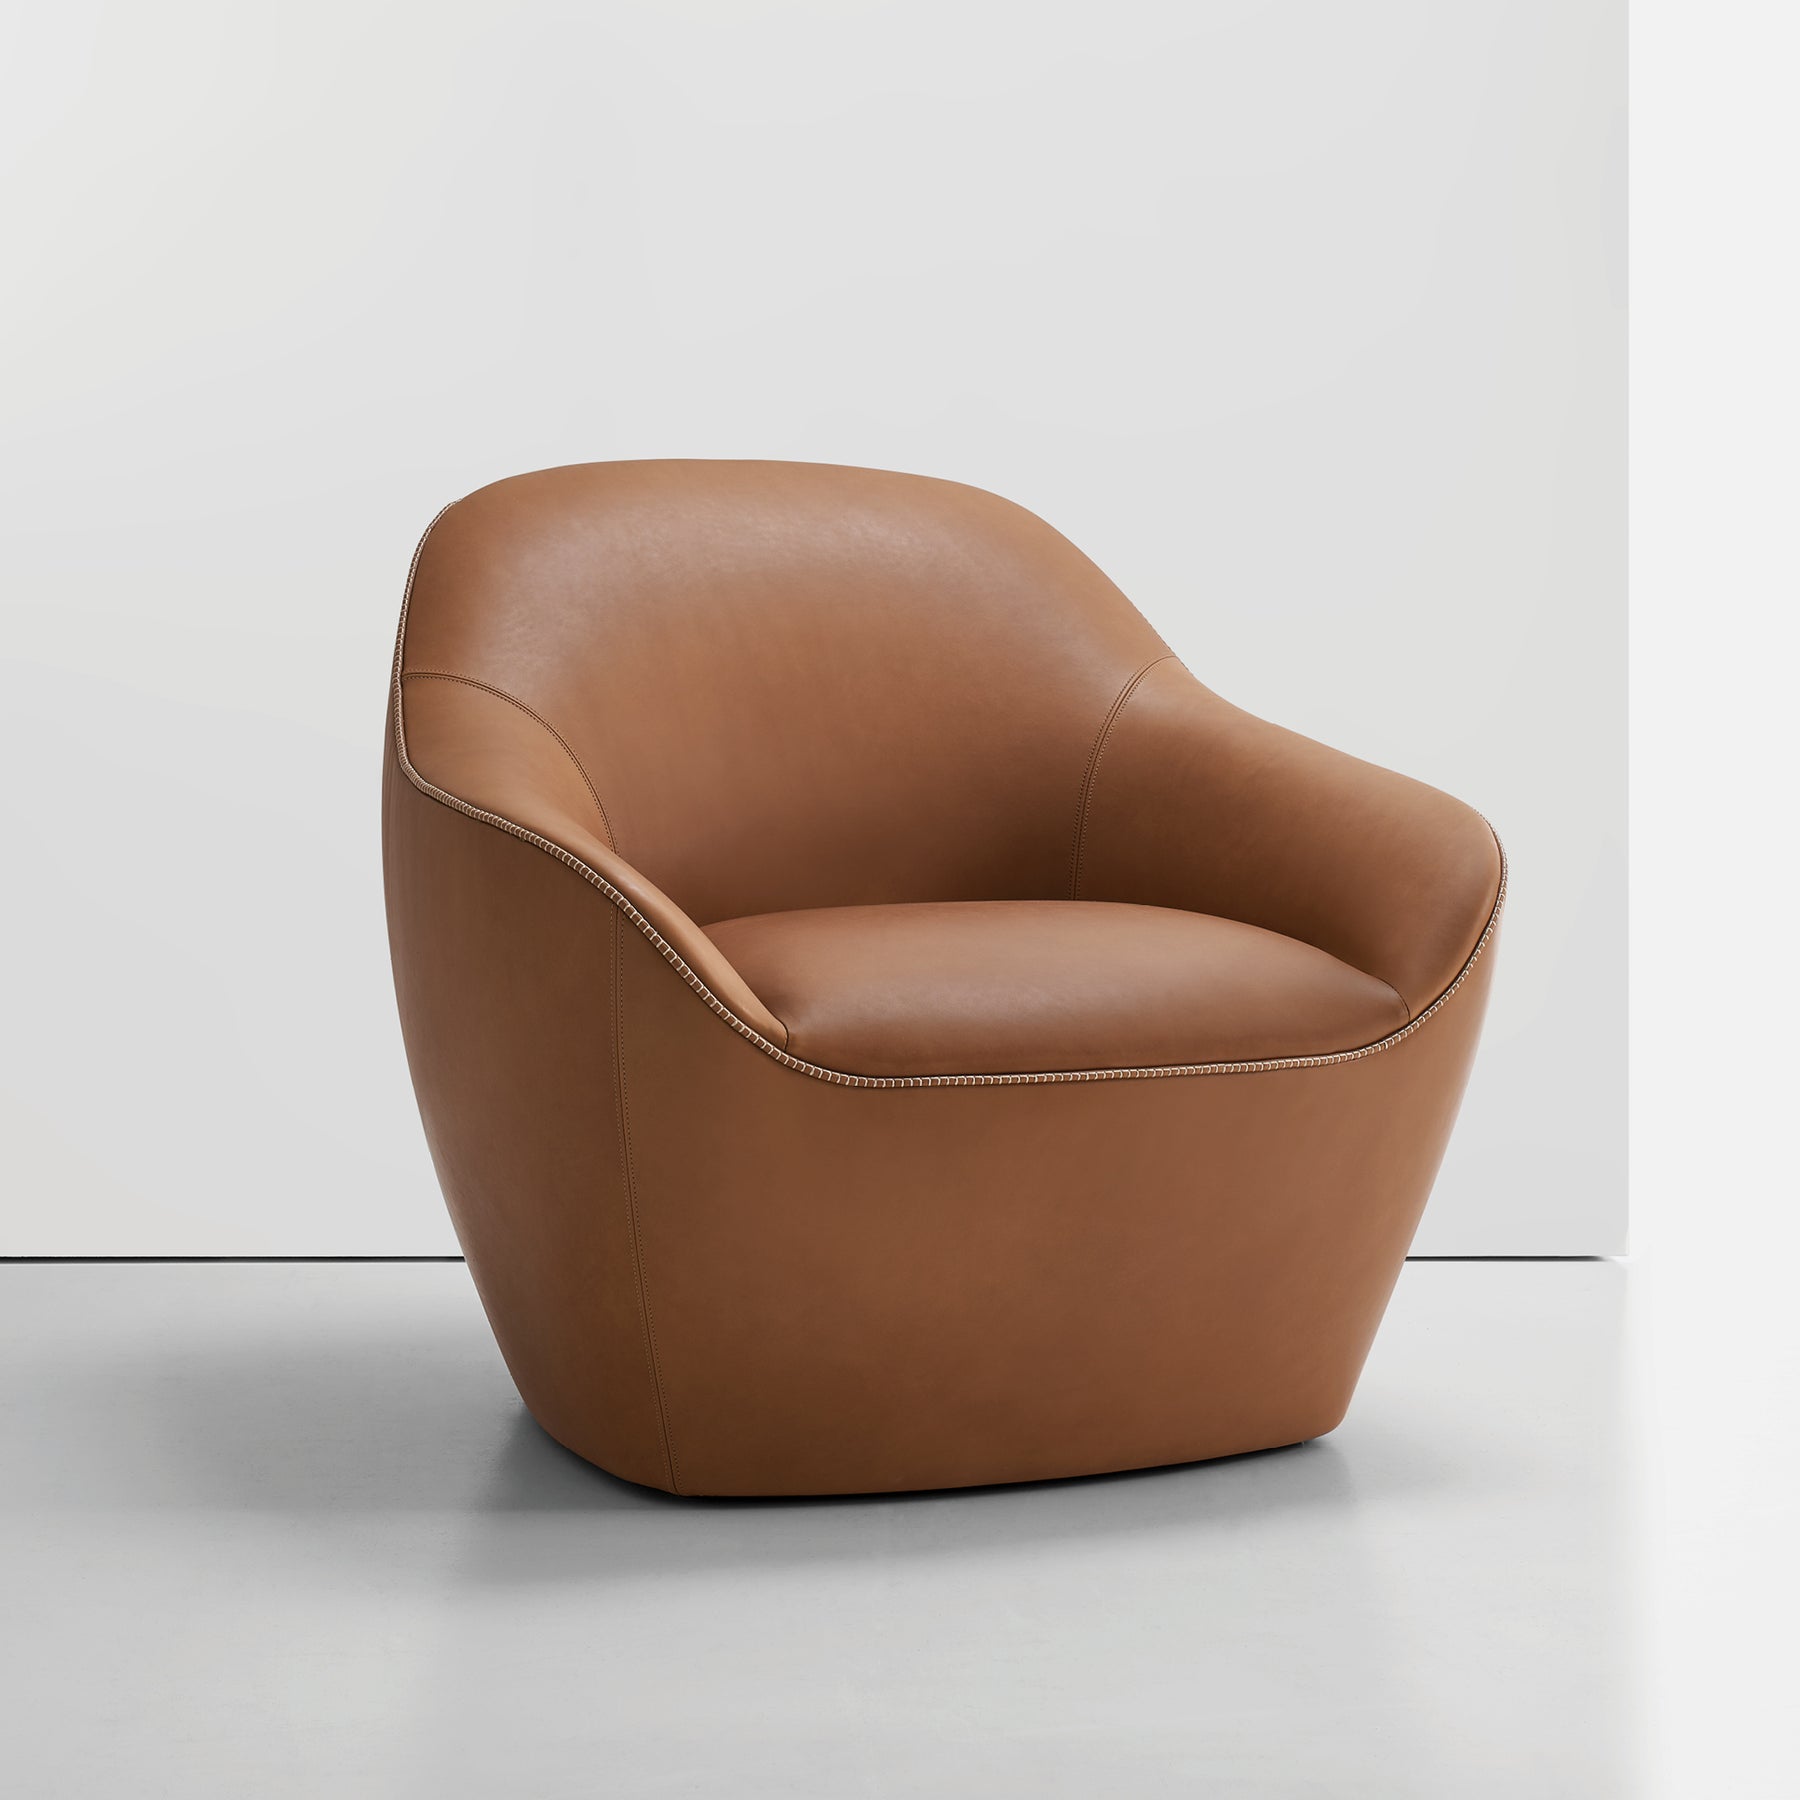 Bernhardt Design Becca Chair by Terry Crews